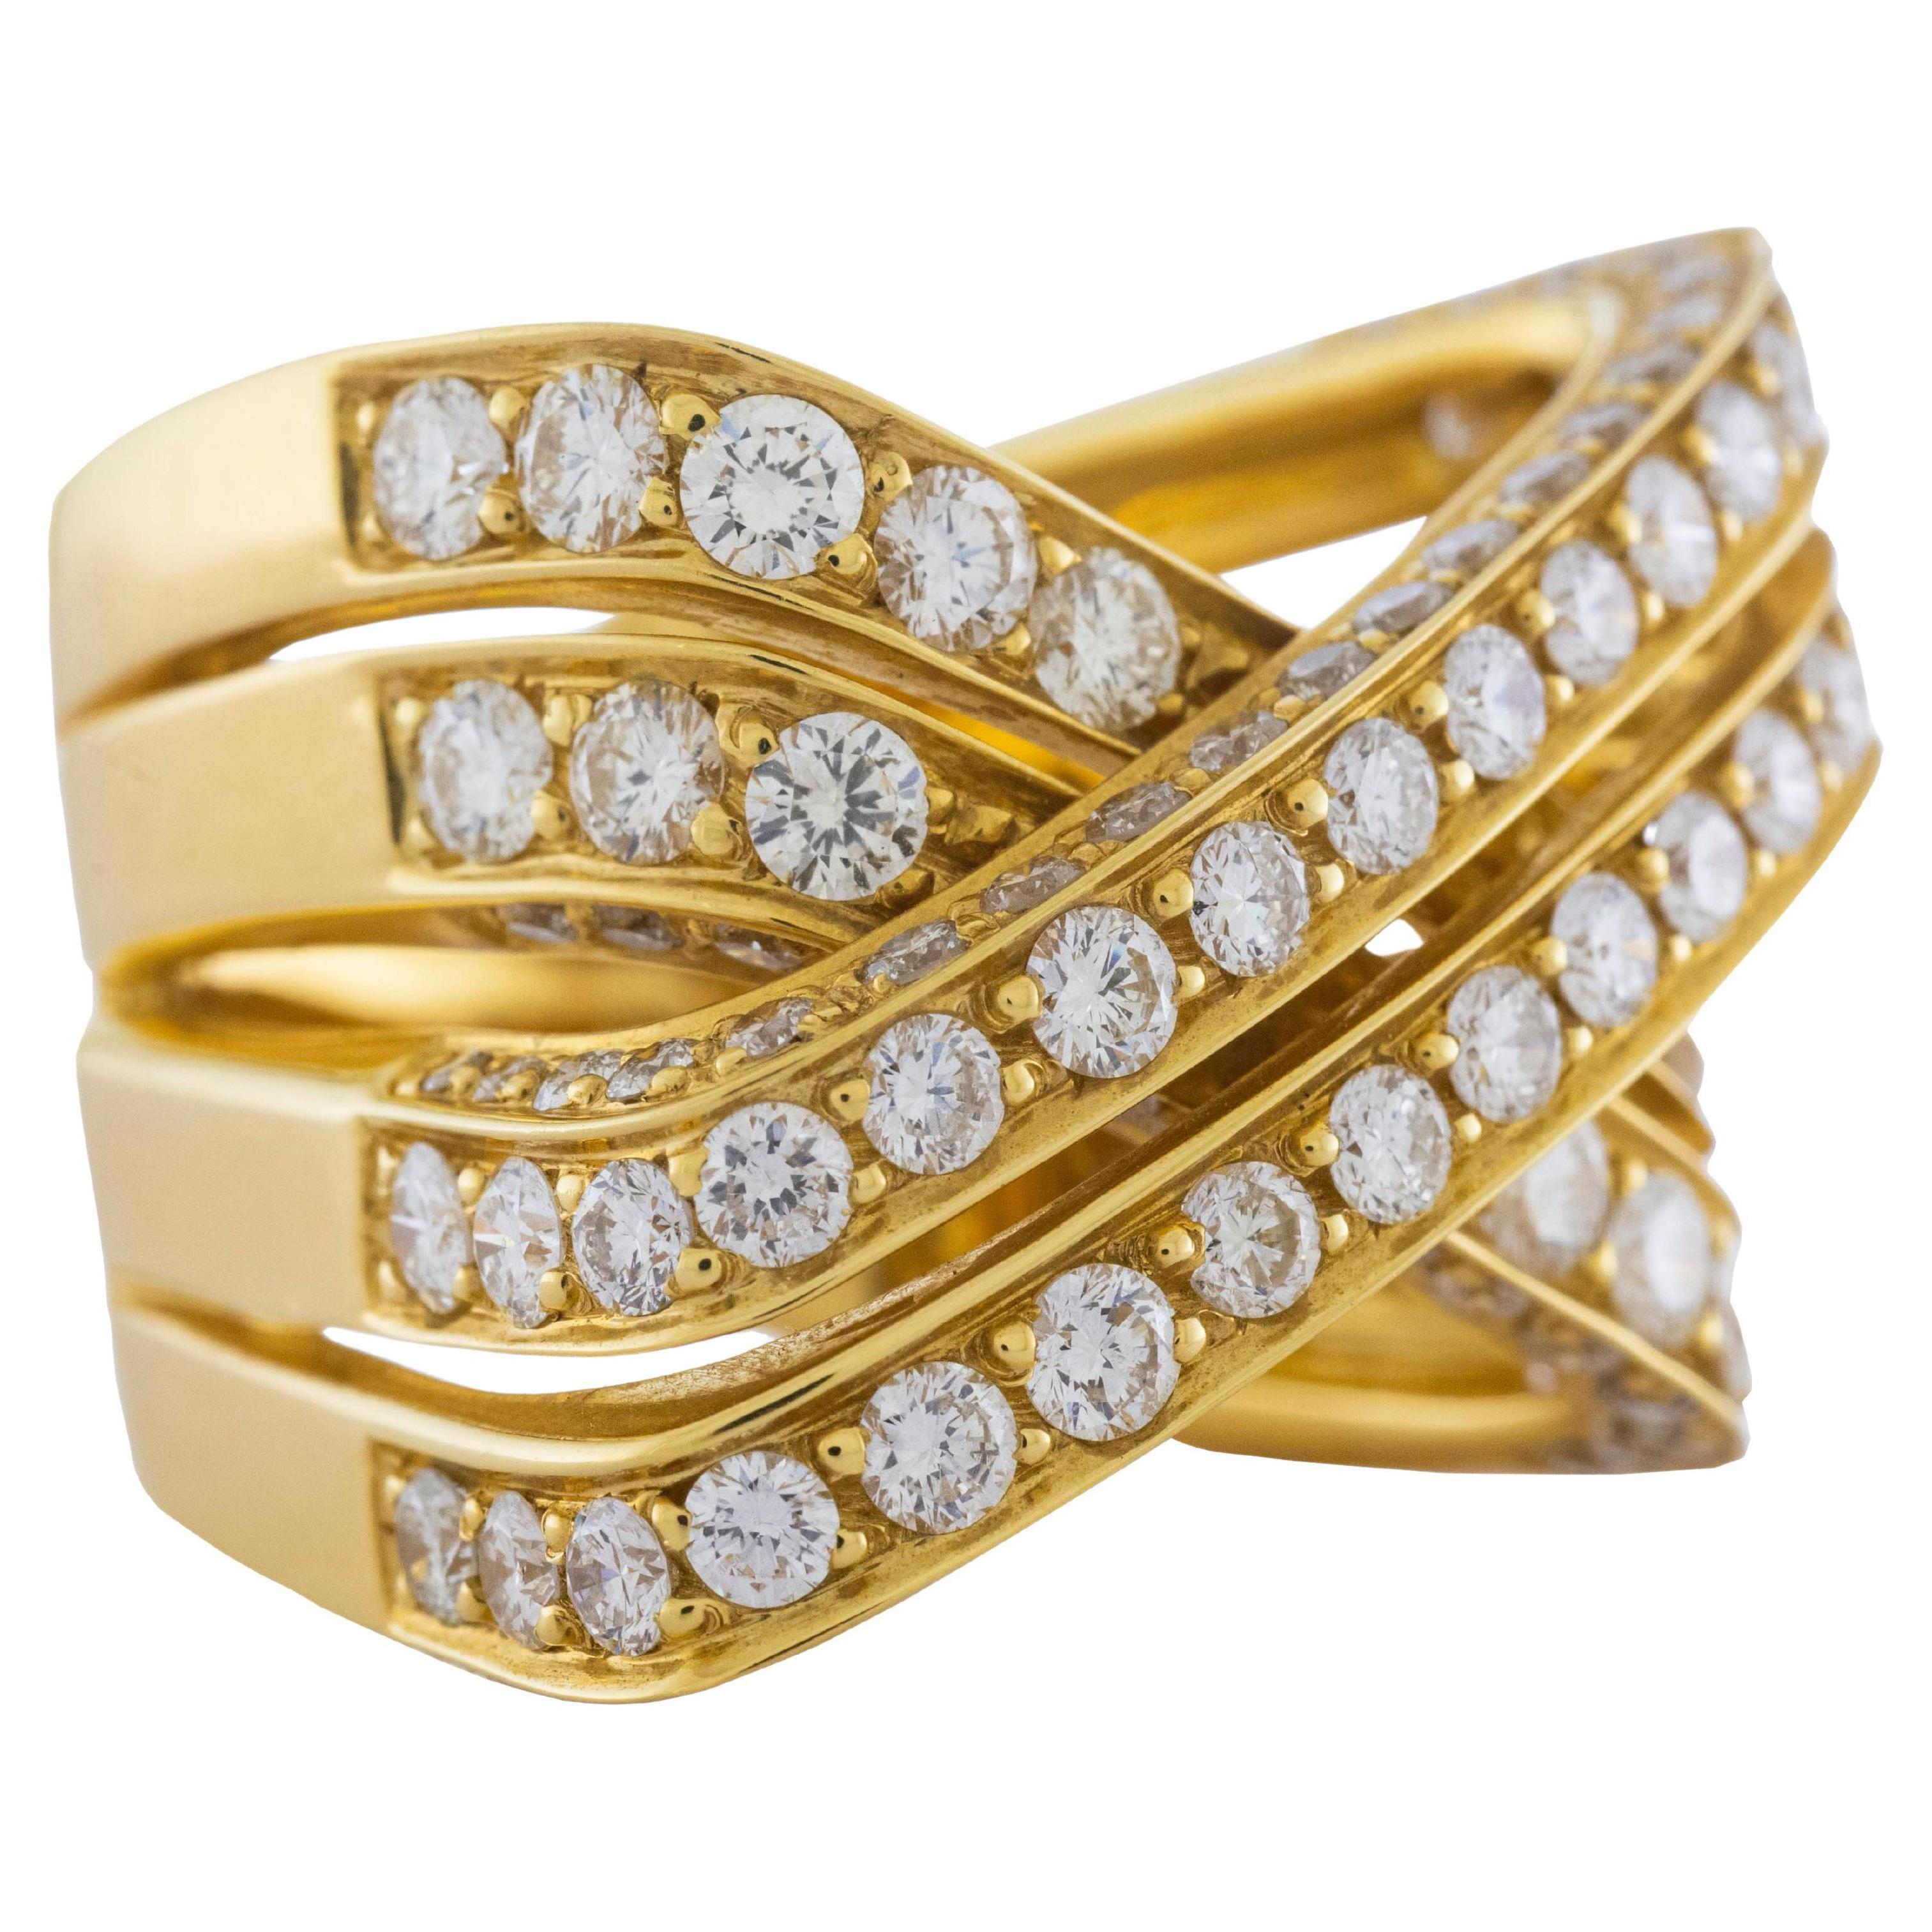 18 Karat Yellow Gold Diamonds Ct 3.89 Knot Ring Cluster Band Cocktail